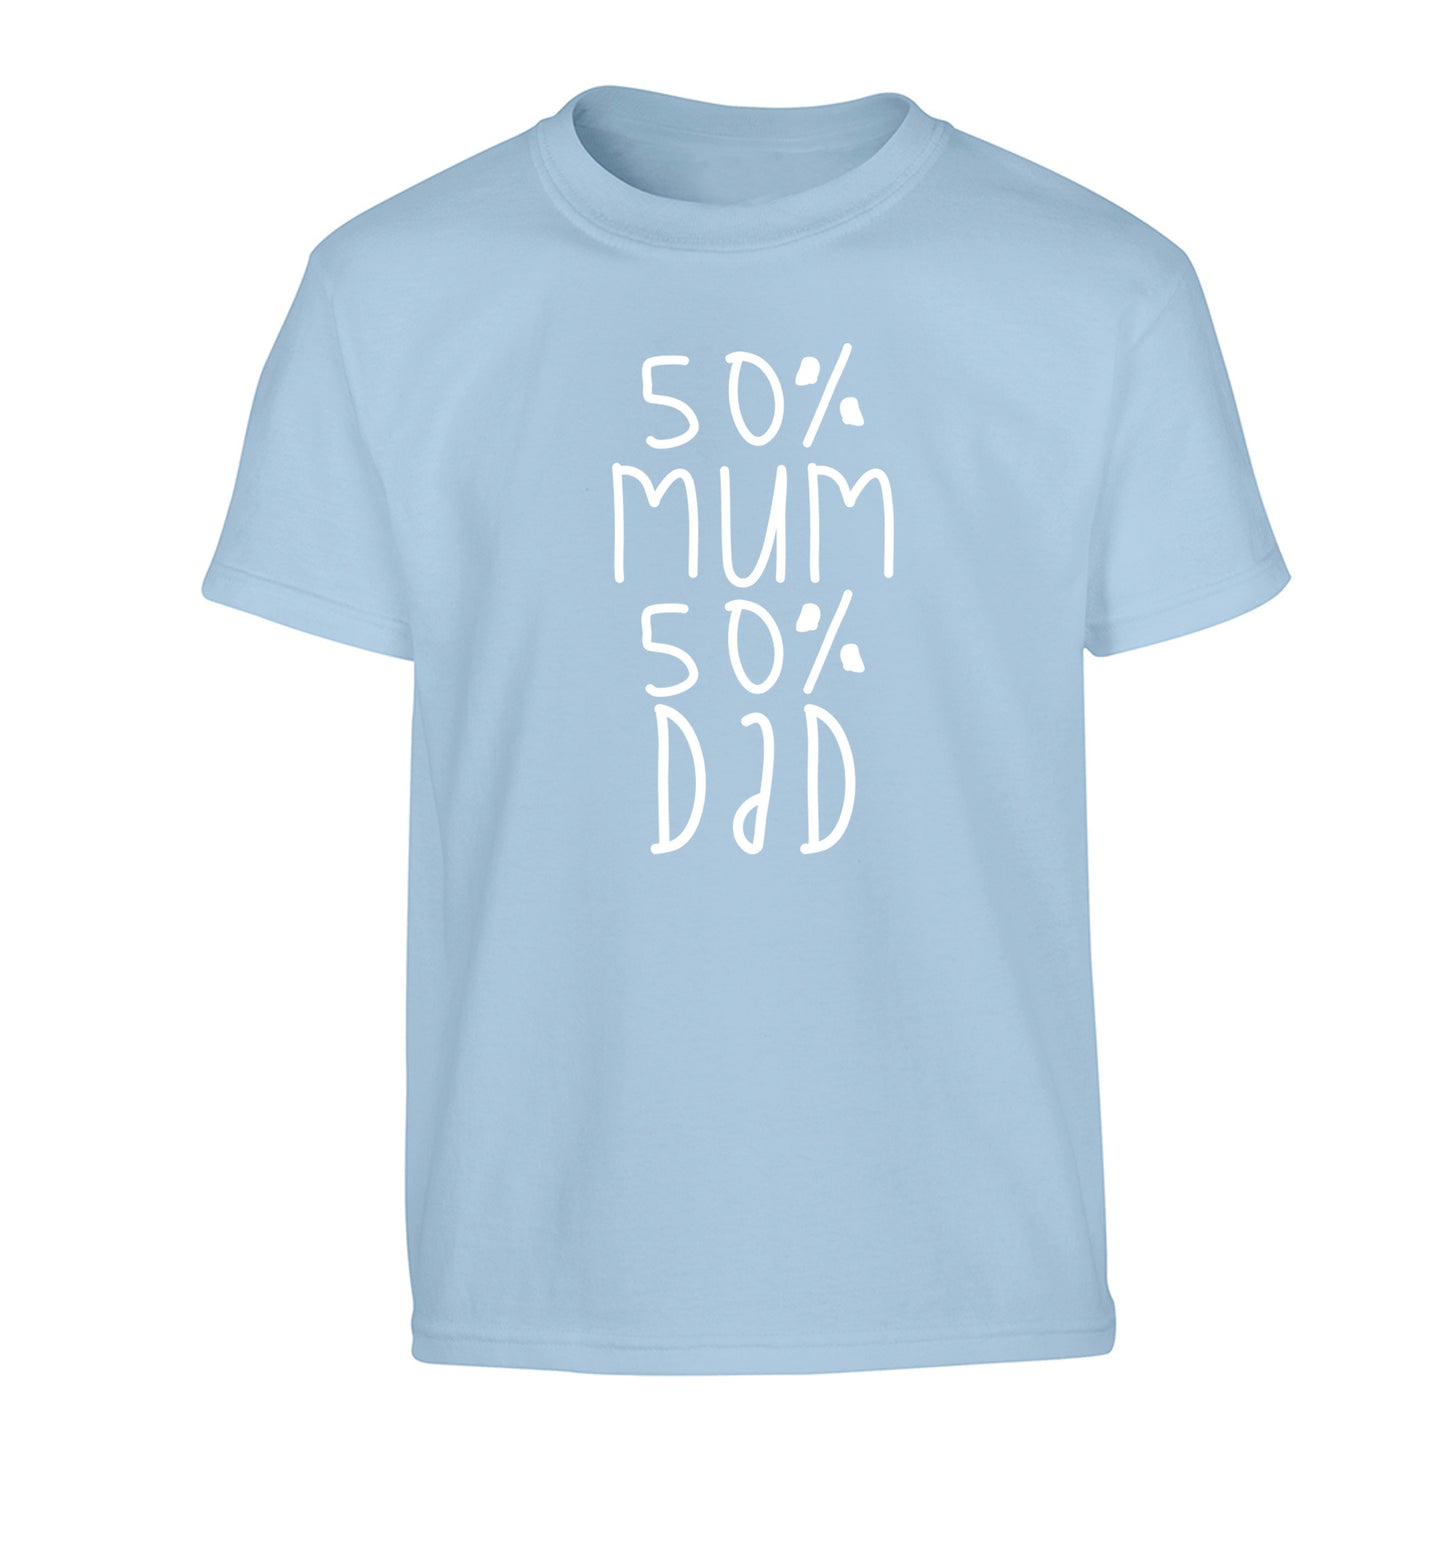 50% mum 50% dad Children's light blue Tshirt 12-14 Years